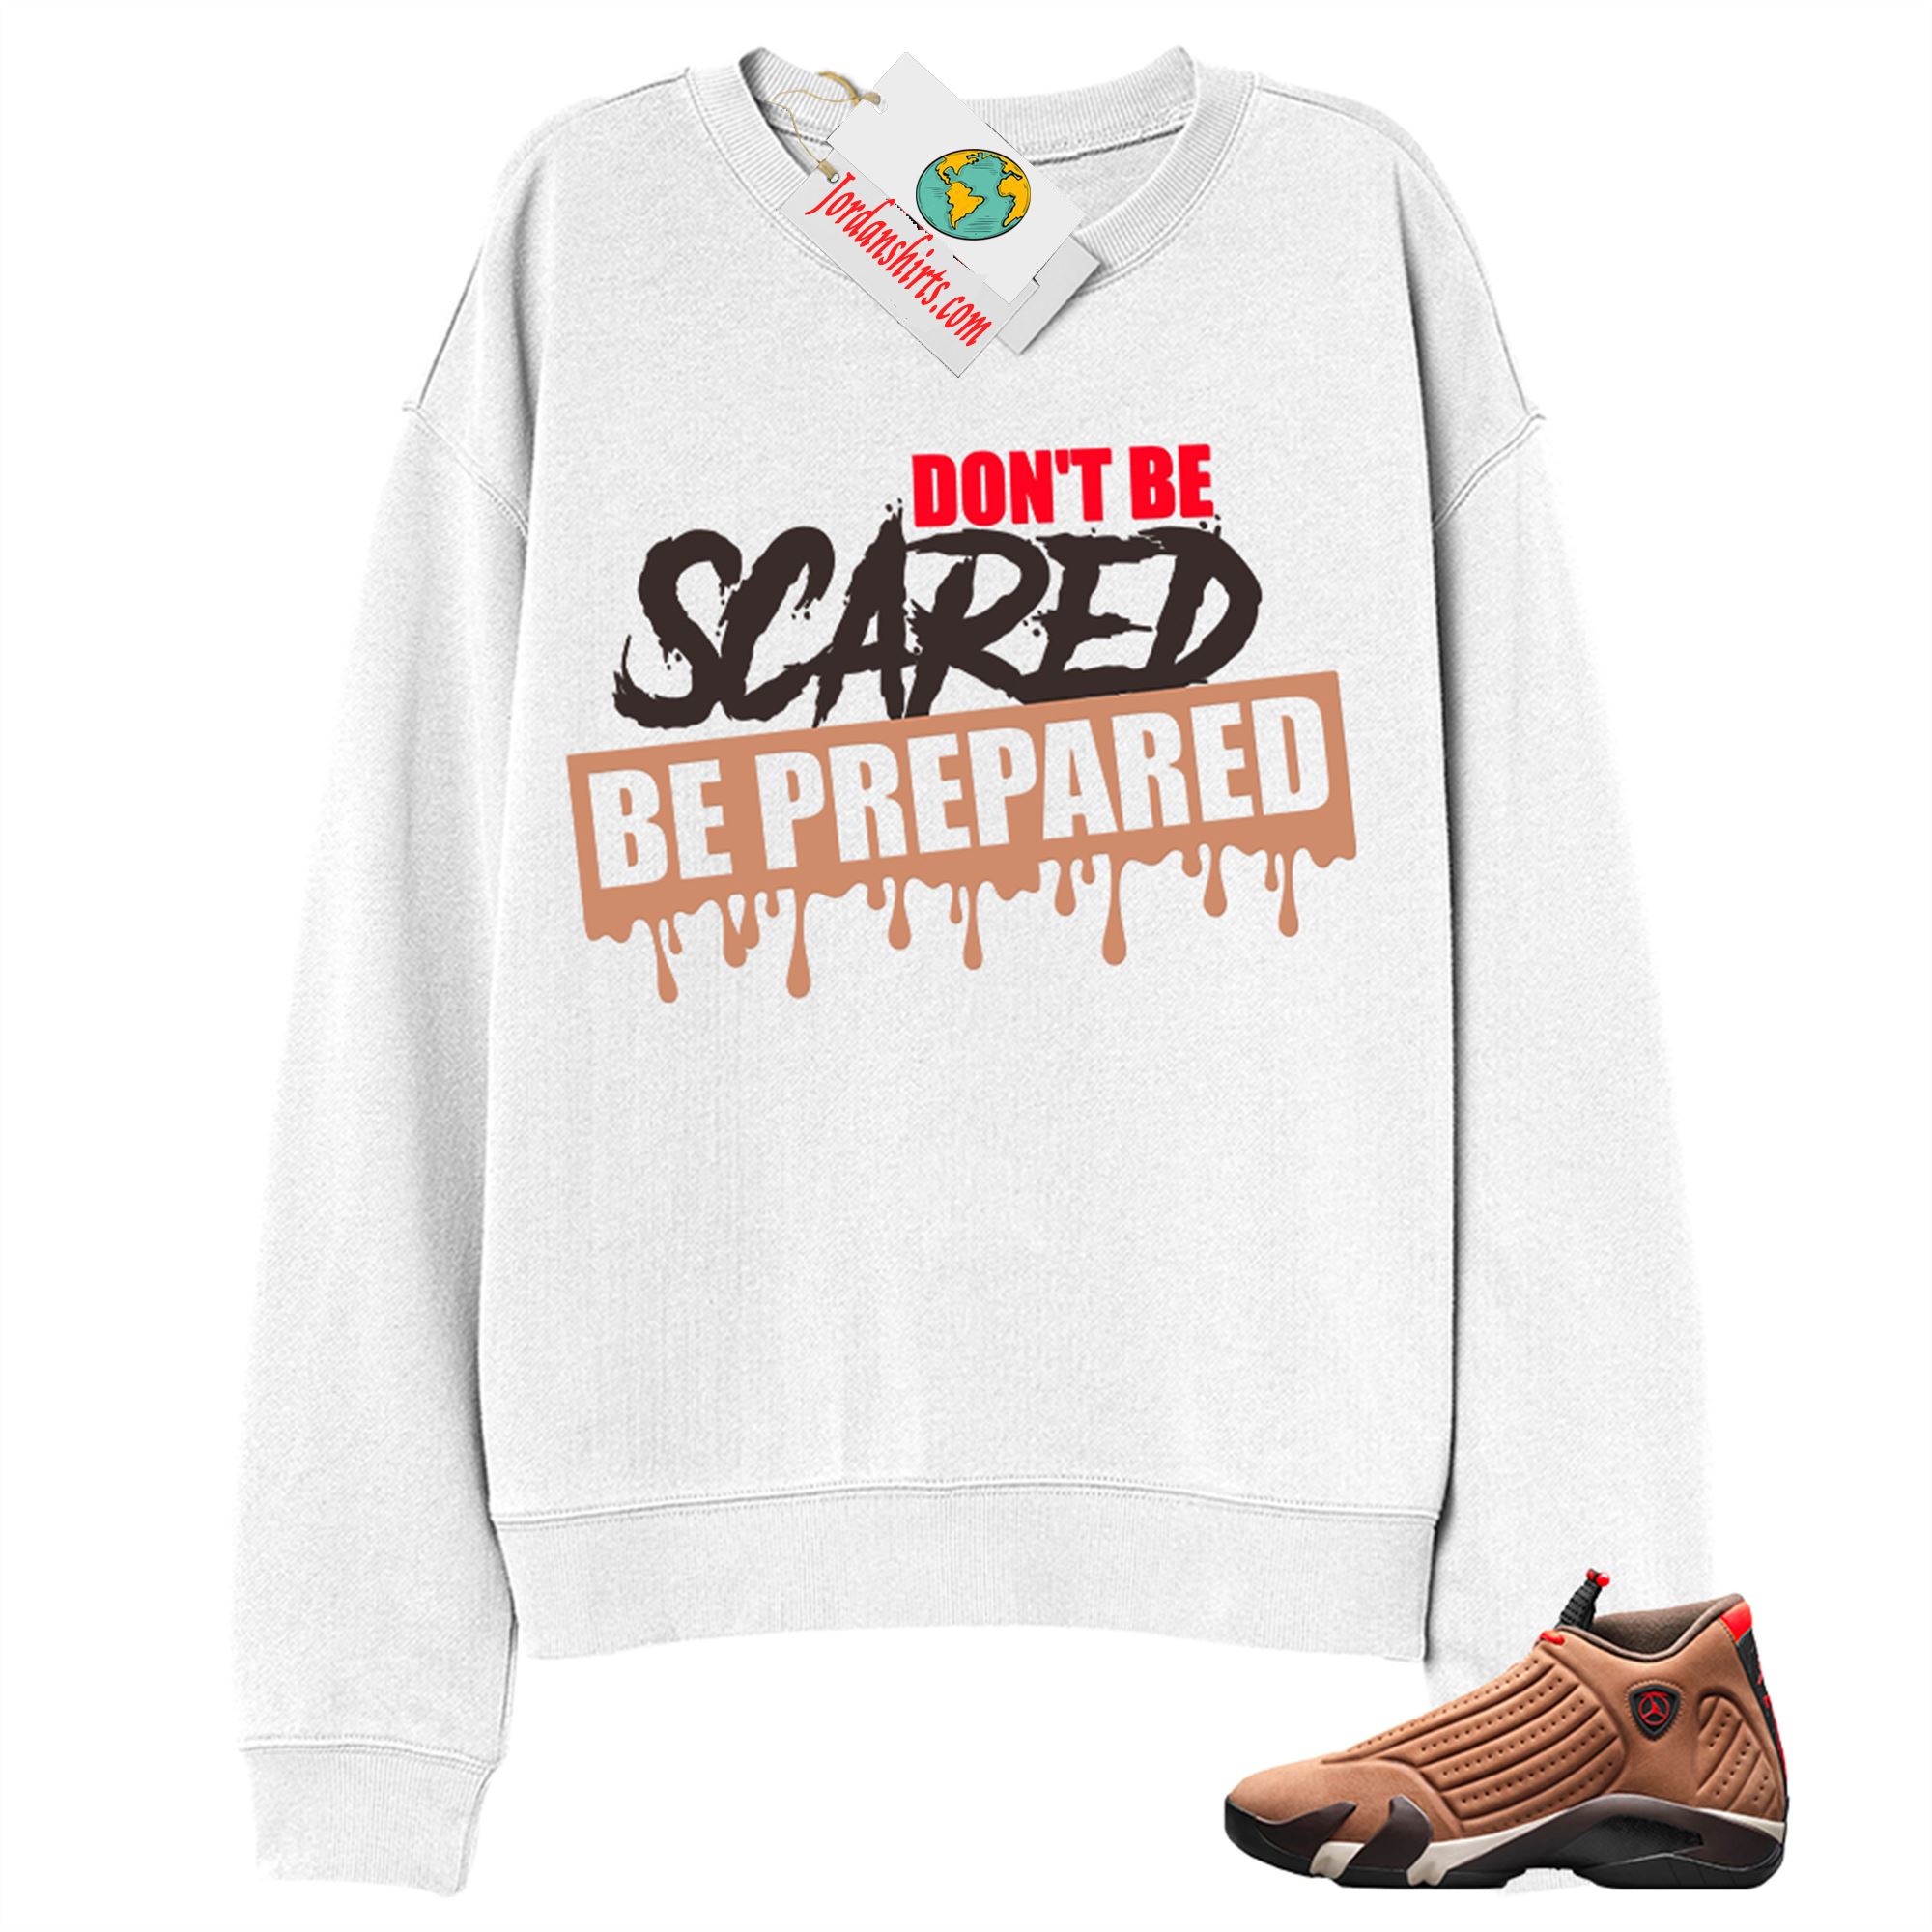 Jordan 14 Sweatshirt, Dont Be Scared Be Prepared White Sweatshirt Air Jordan 14 Winterized 14s Full Size Up To 5xl